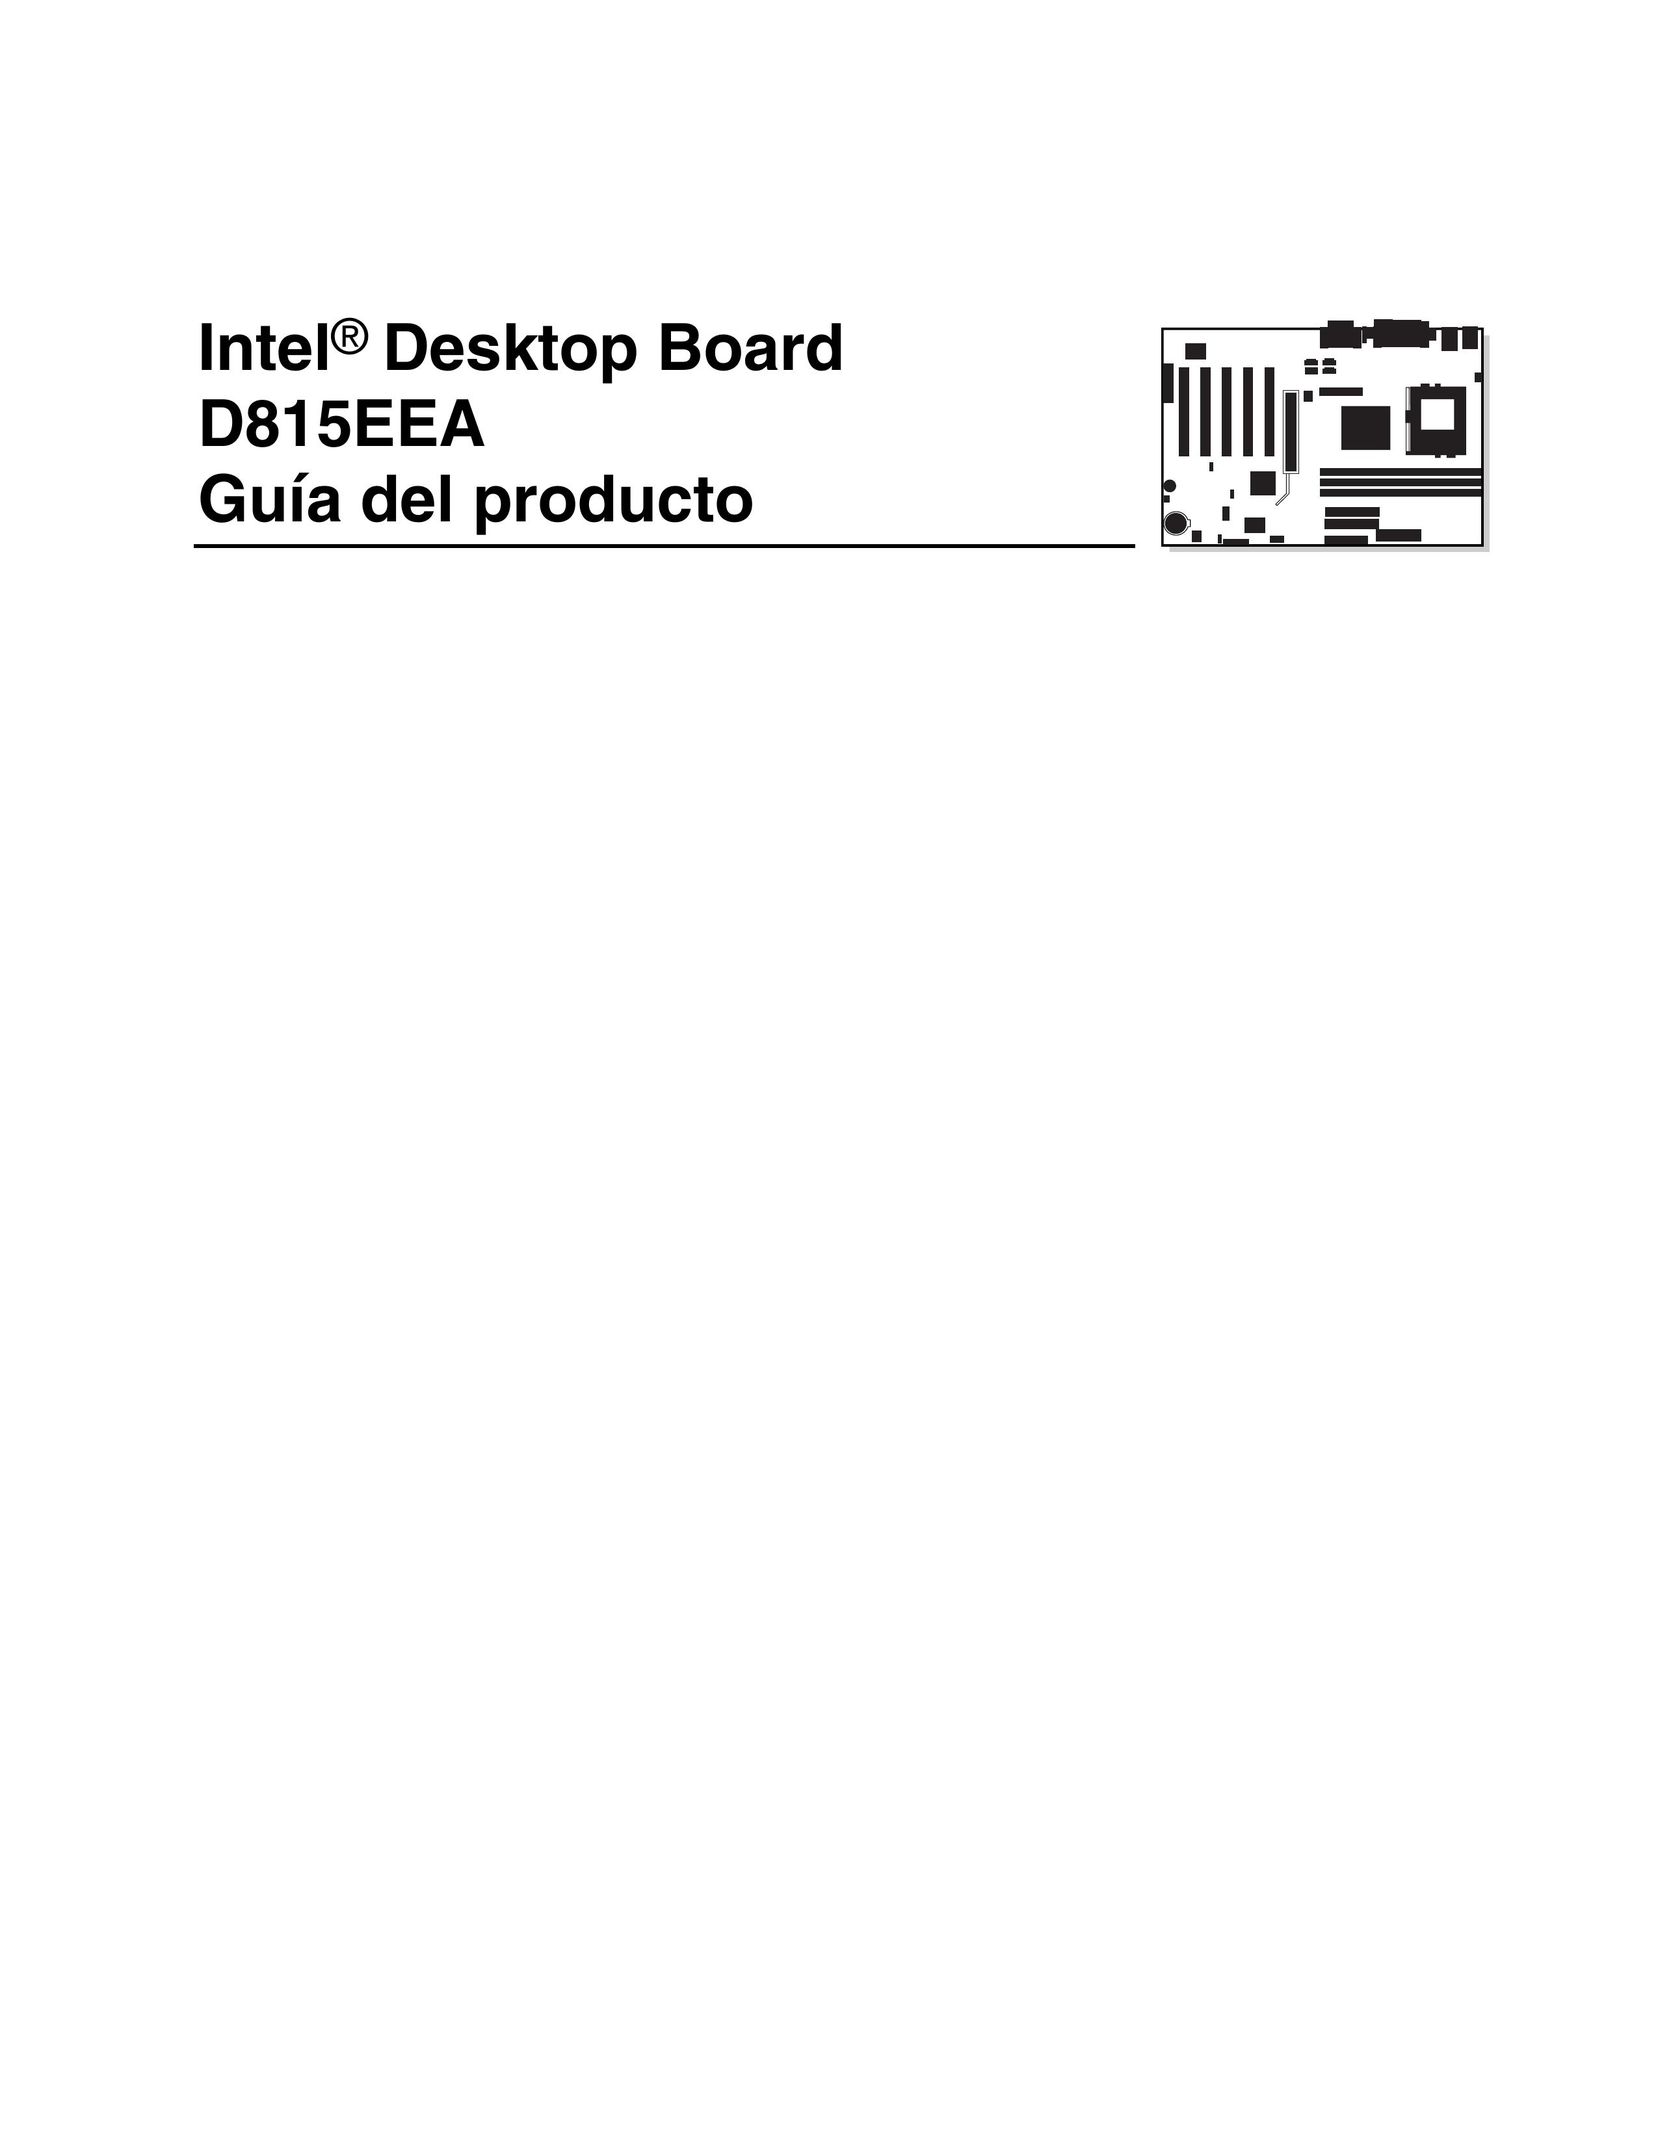 Intel D815EEA Telephone User Manual